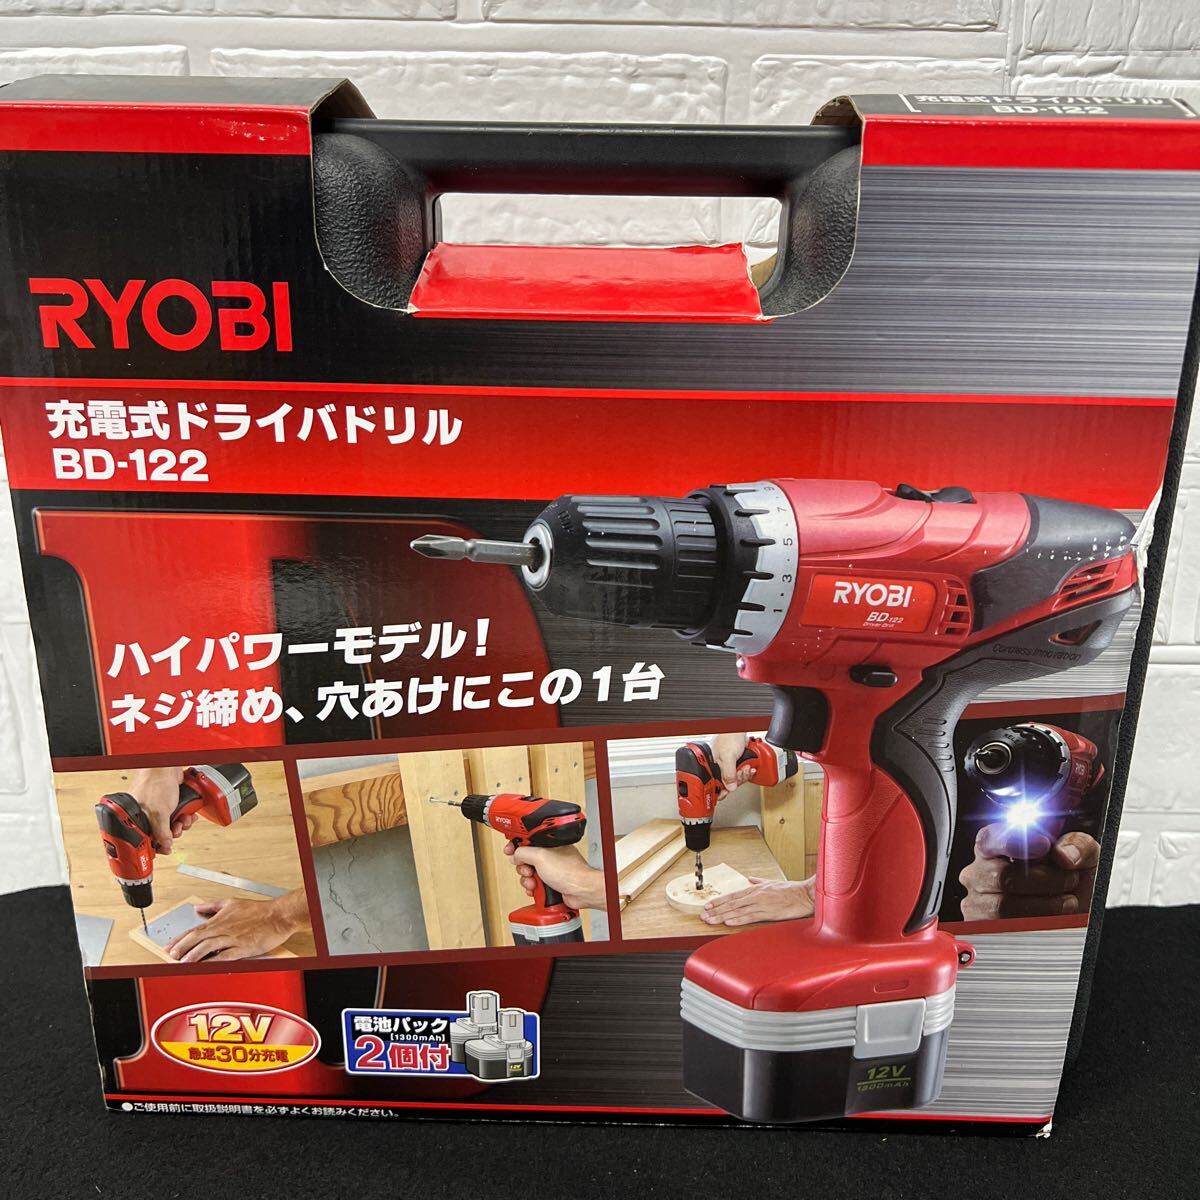 [FS03081000]RYOBI BD-122 operation goods RYOBI Ryobi Makita 18V DIY charger rechargeable driver drill BOSCH 4V power tool impact 